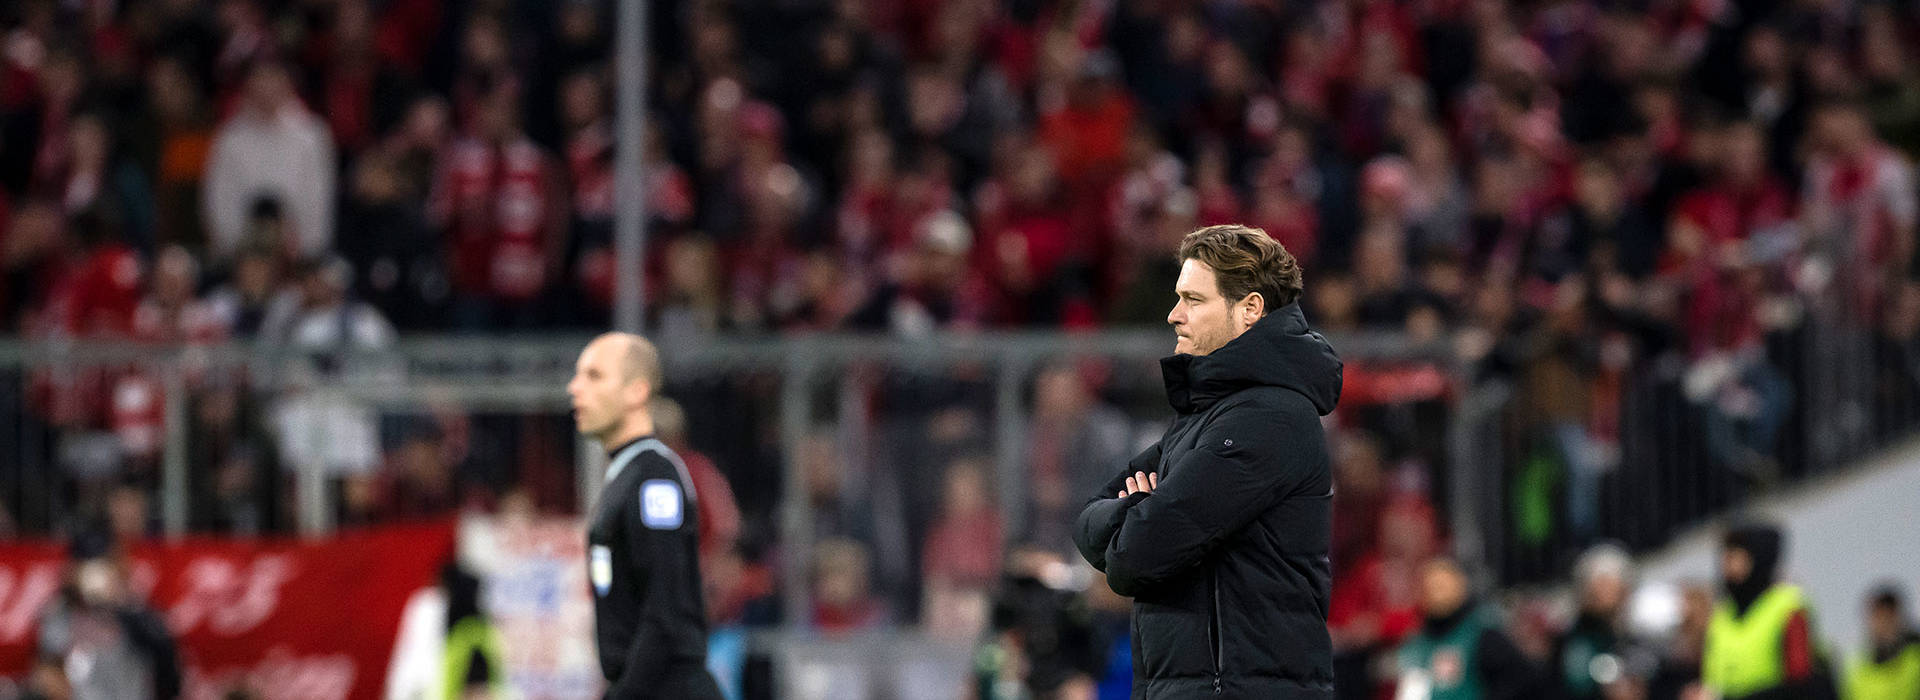 "Twelve decent minutes is not enough in Munich"